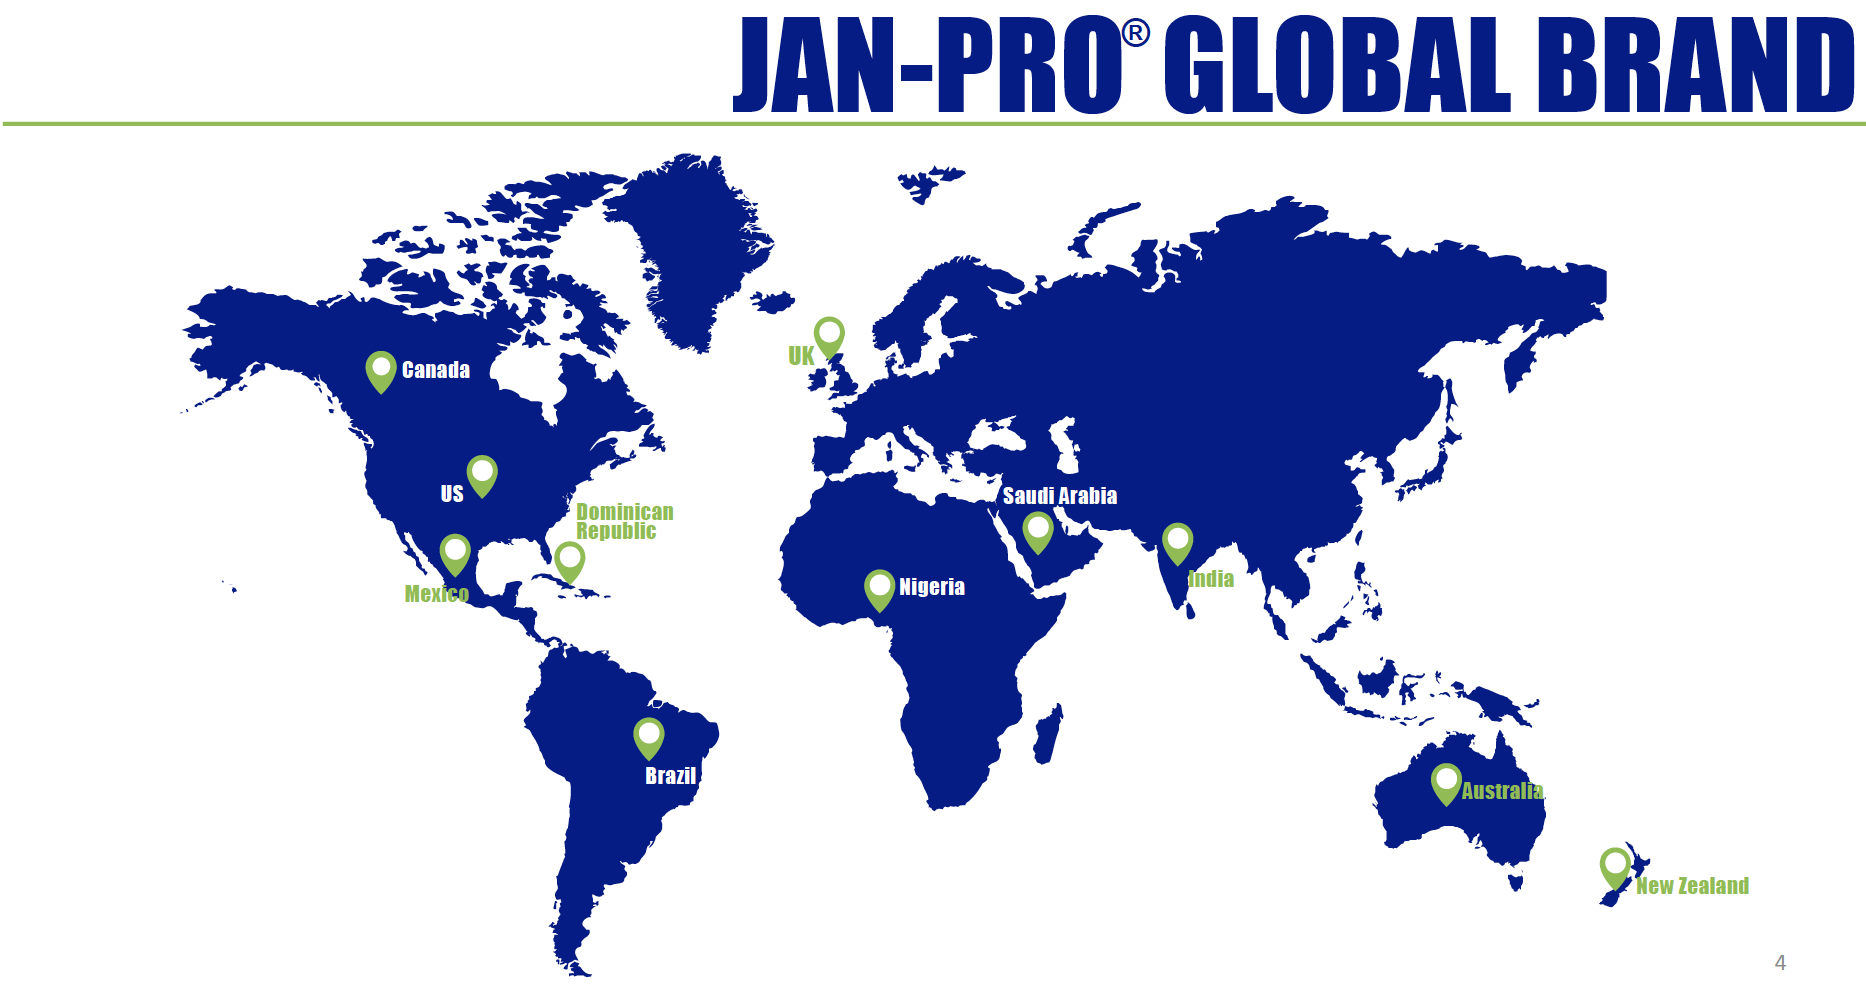 JAN-PRO locations